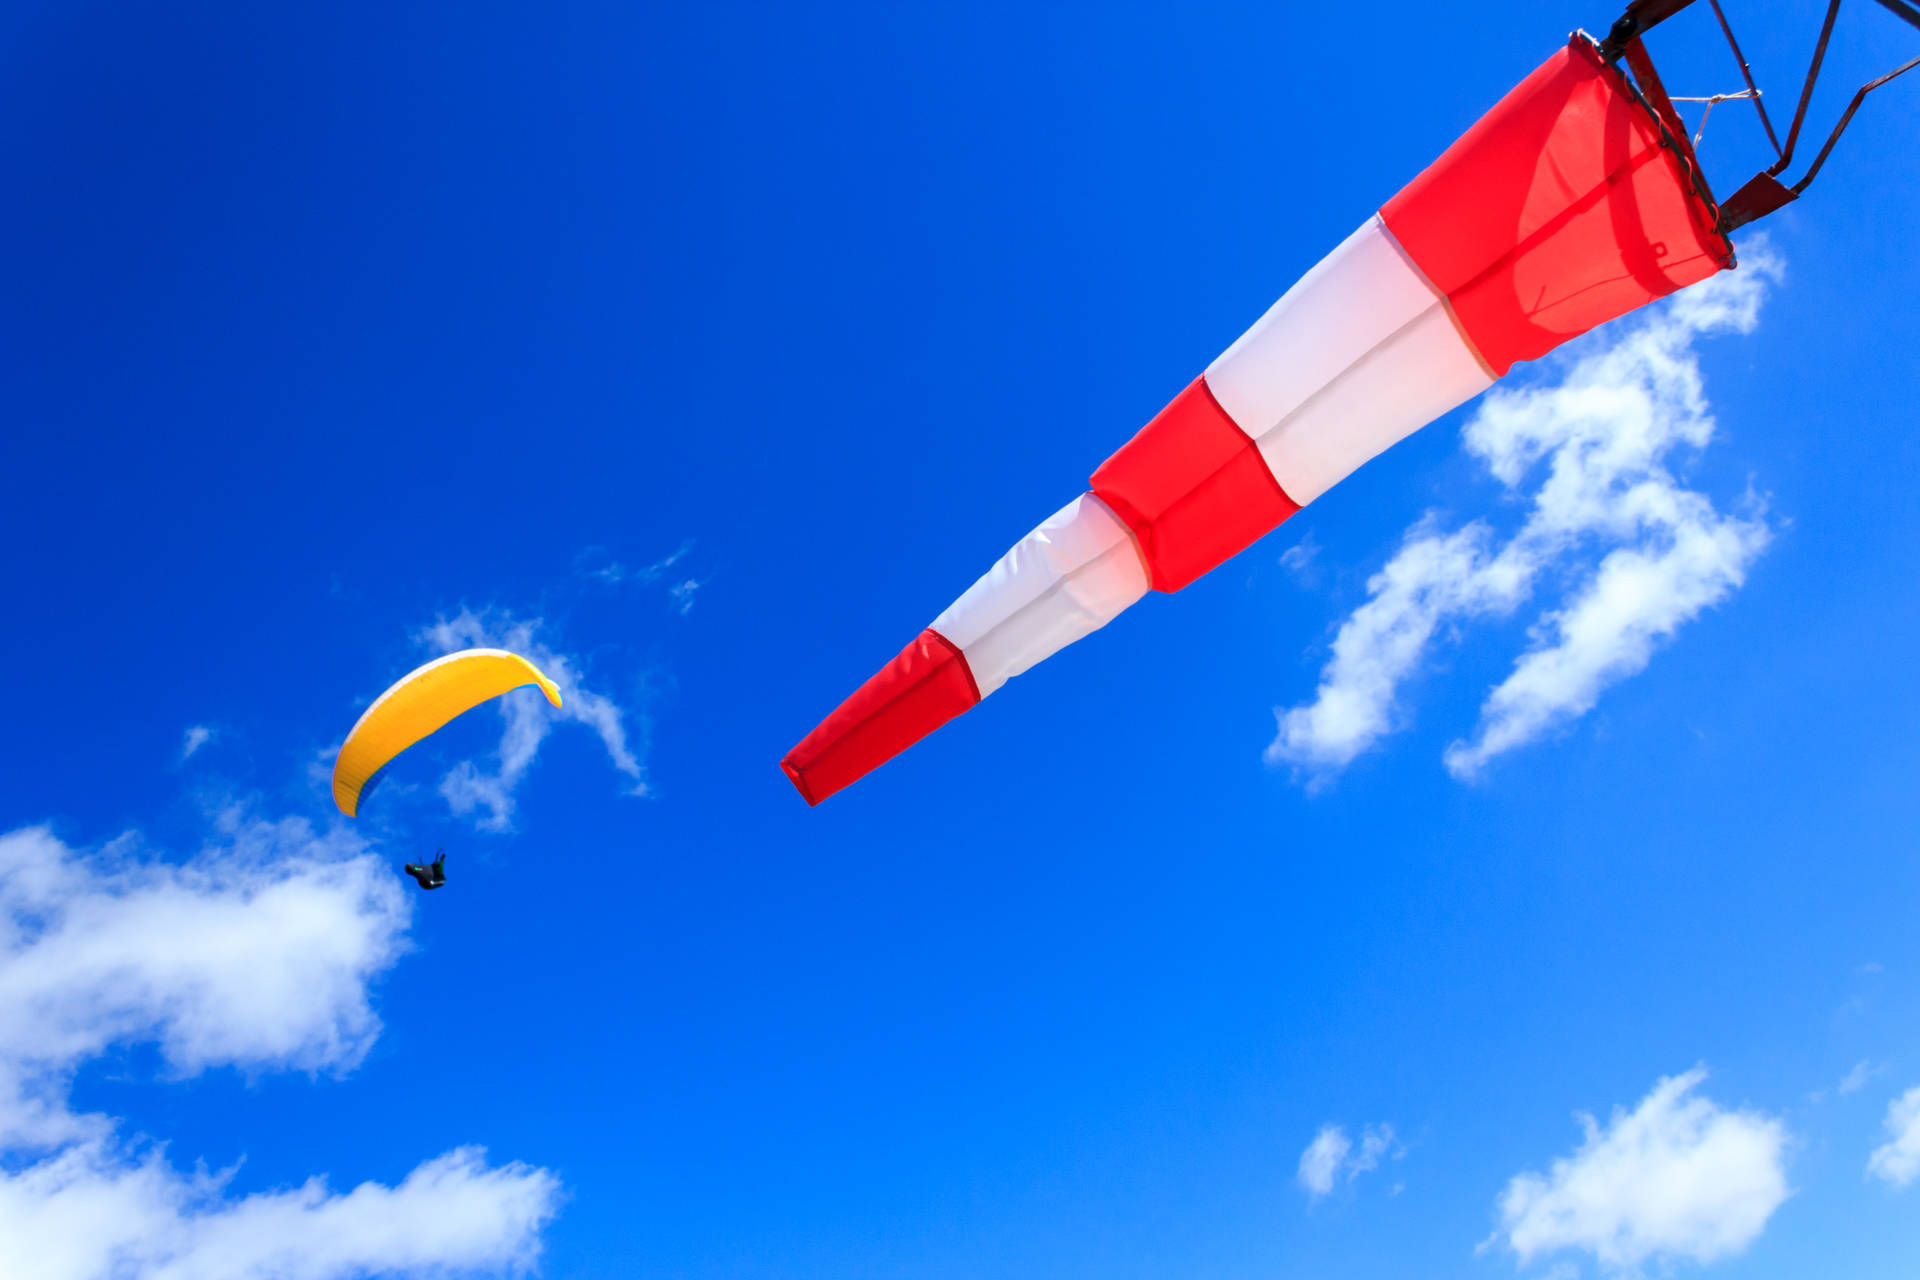 Paragliding Near Wind Indicator Flag Background